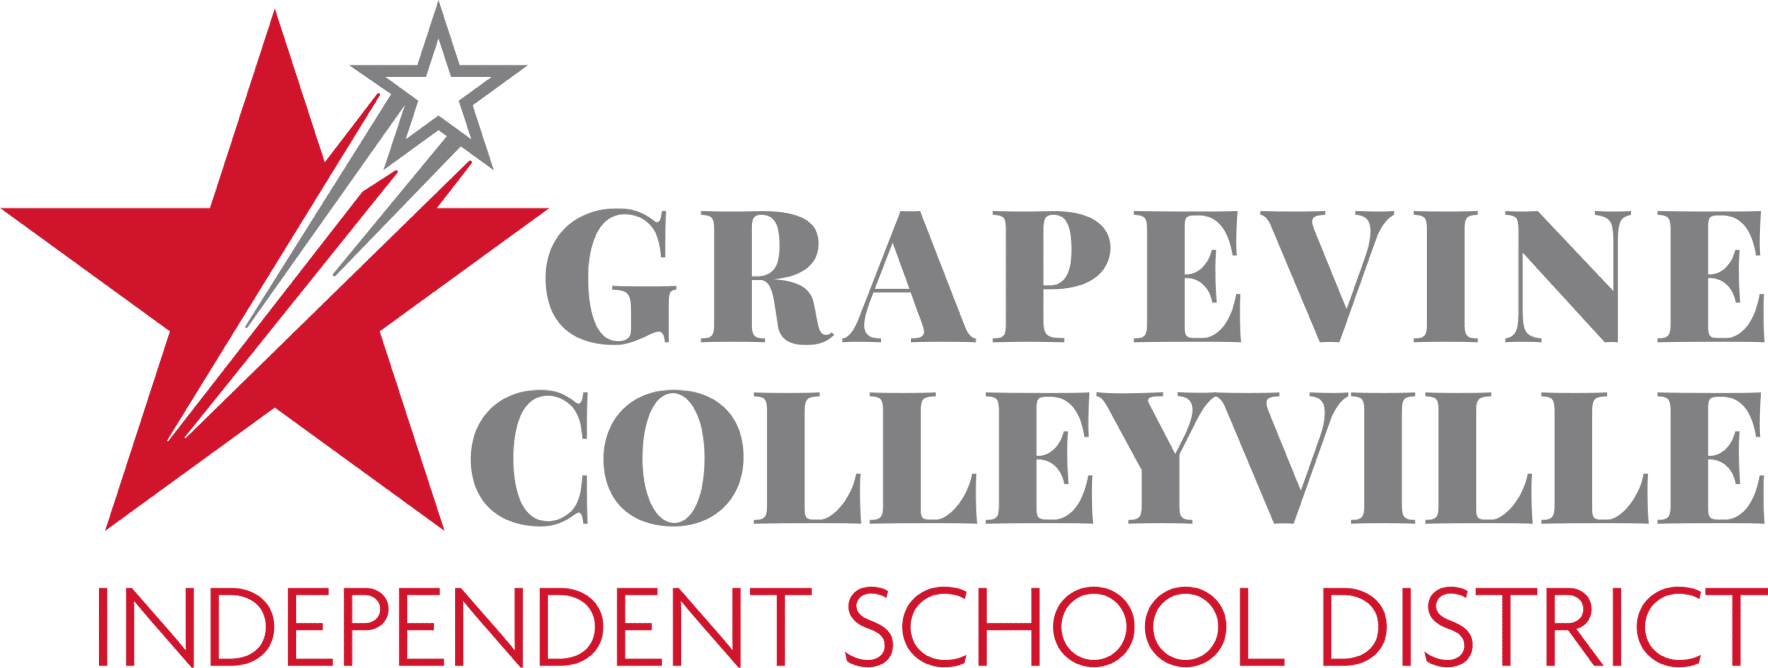 Grapevine Colleyville ISD logo